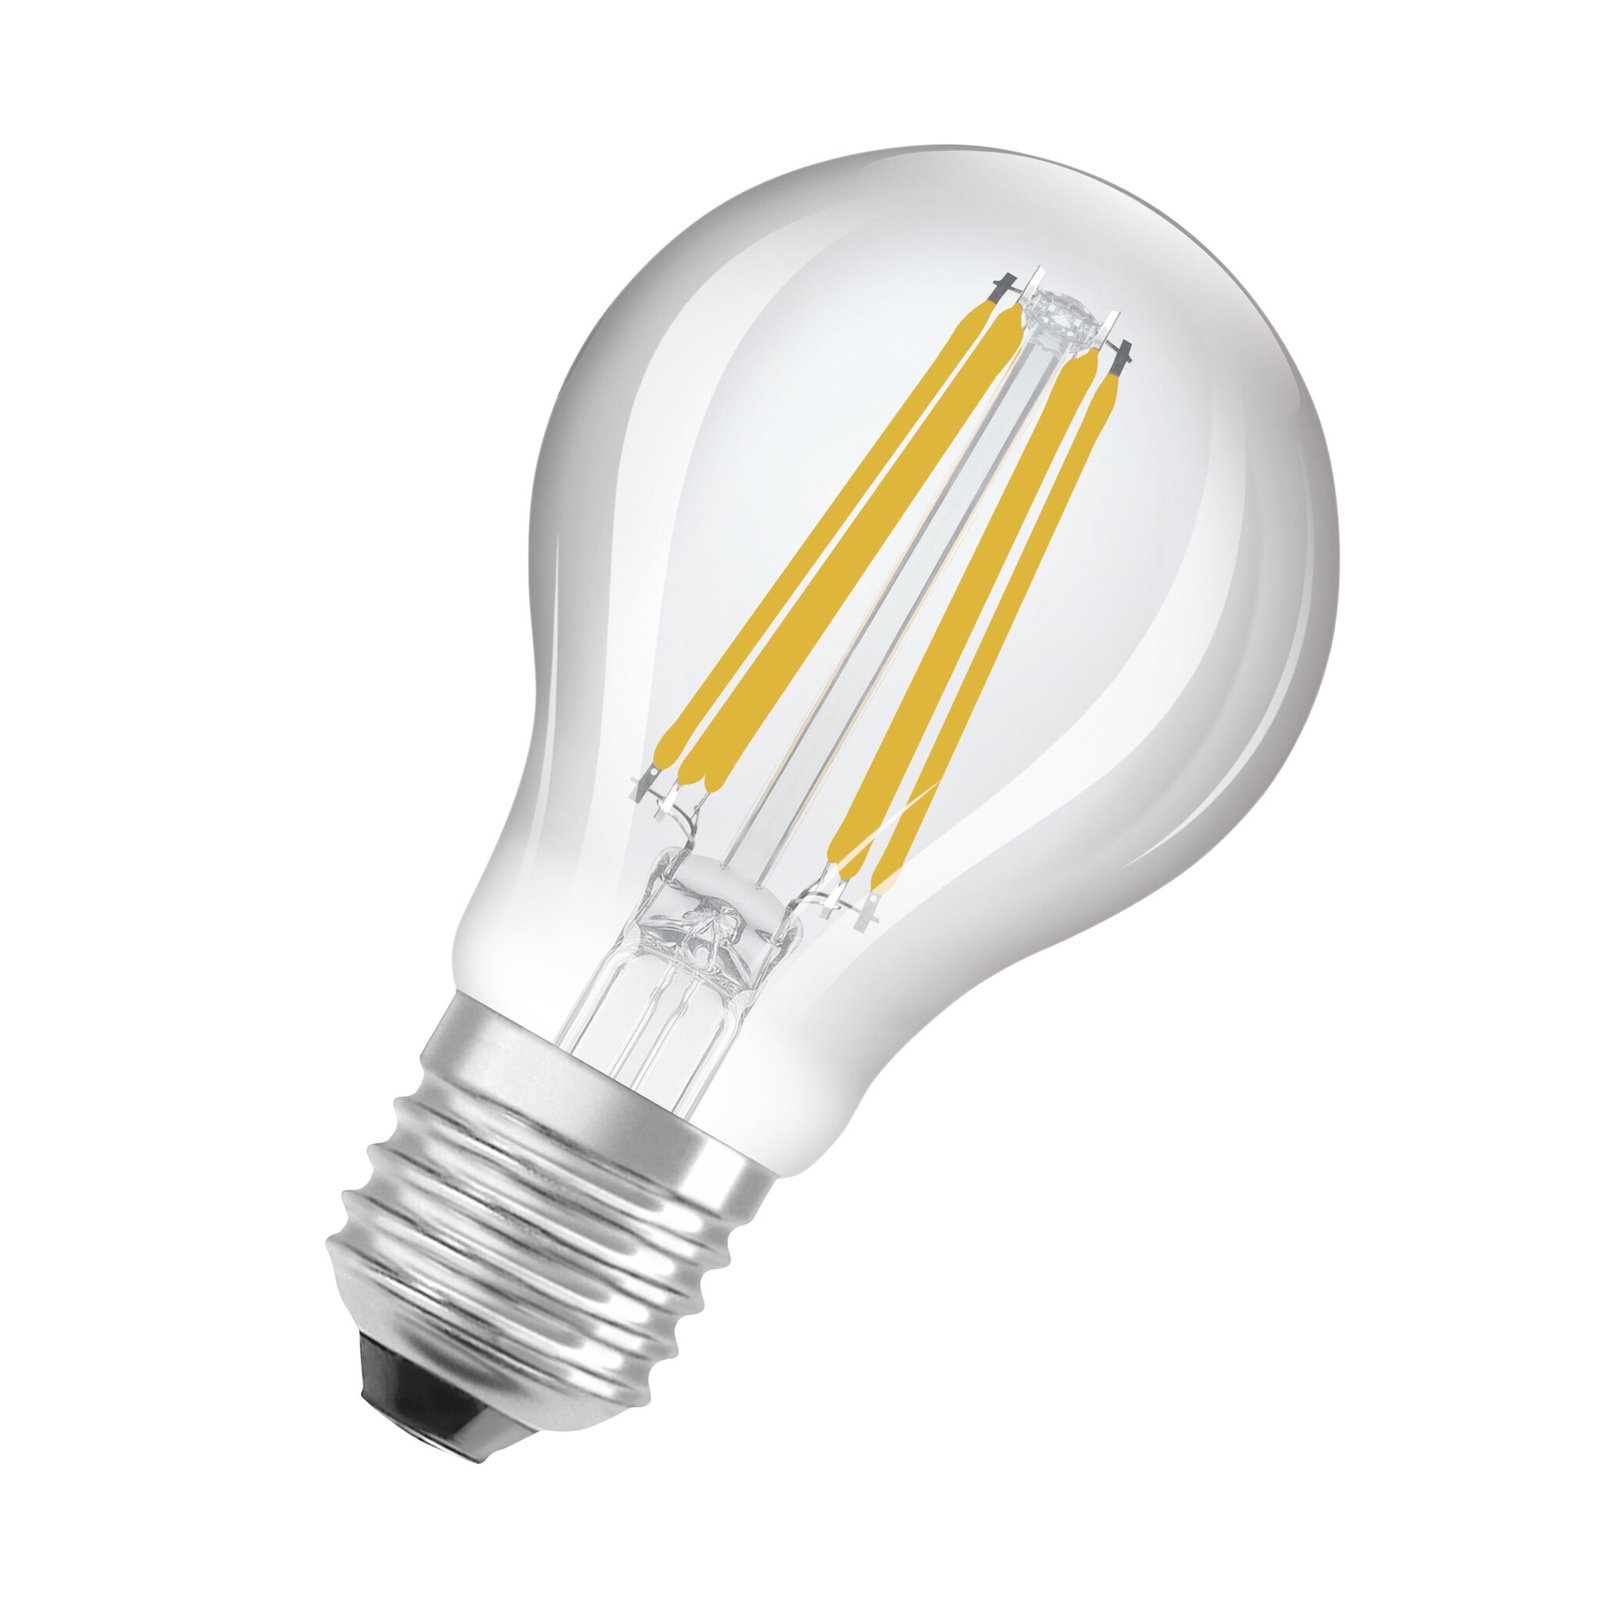 OSRAM LED-Lampe E27 A60 5W 1.055lm 3.000K klar